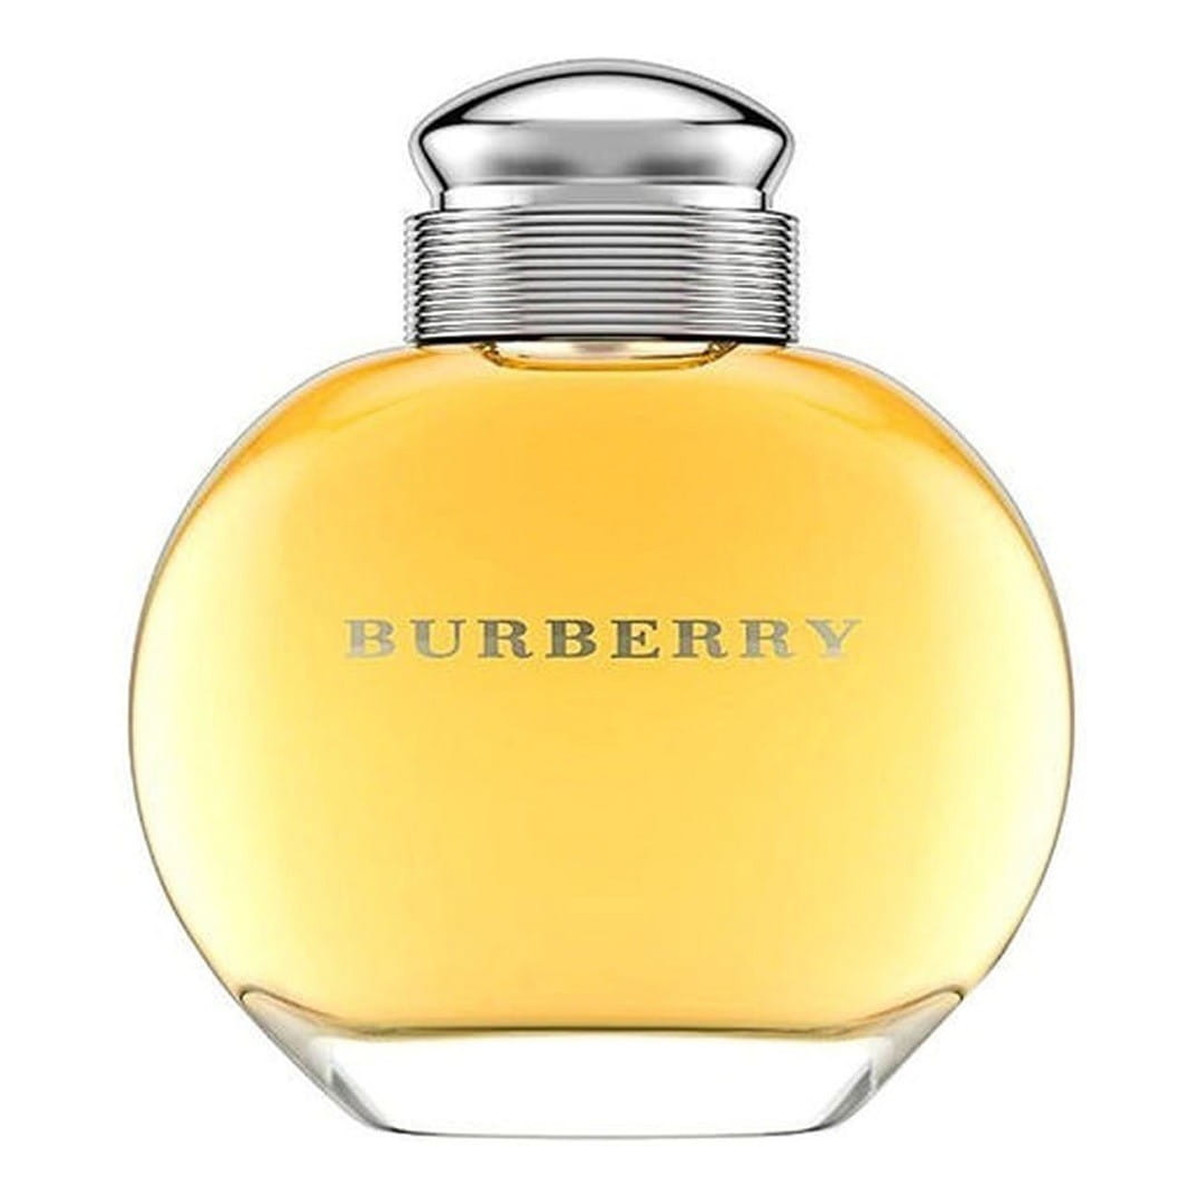 Burberry Woman Woda perfumowana TESTER 100ml